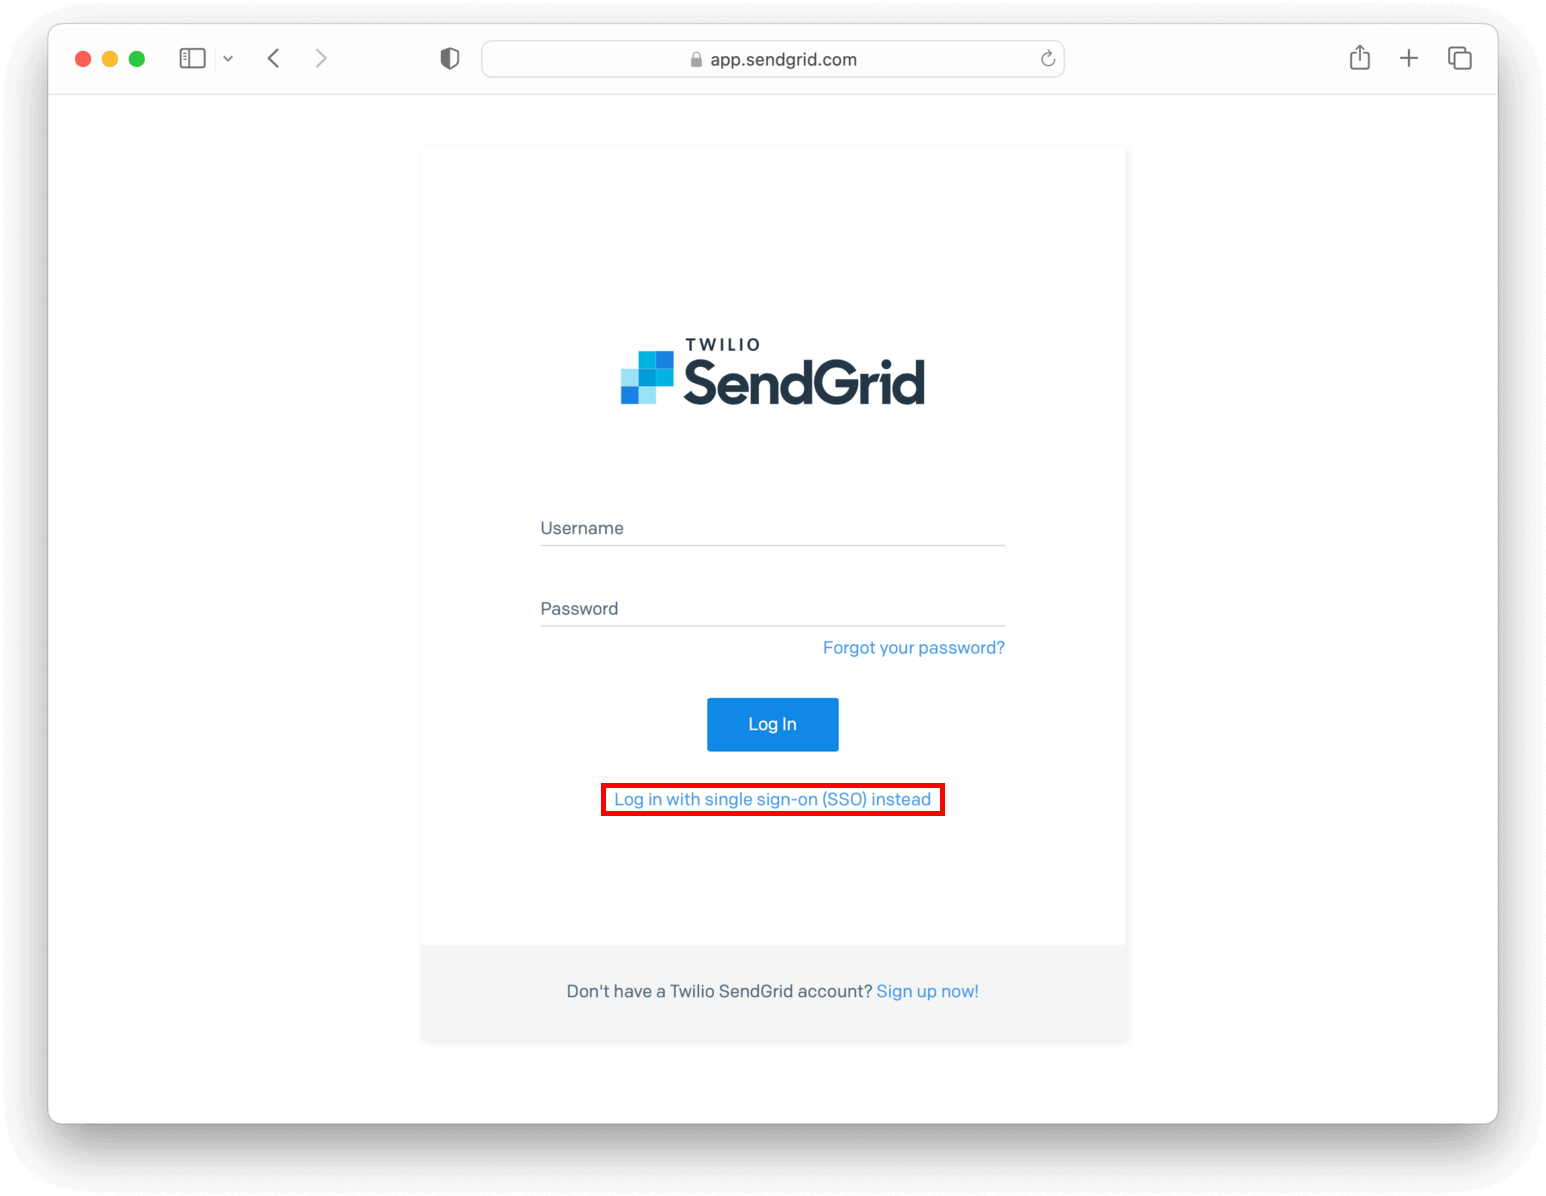 SendGrid login page with SSO option.